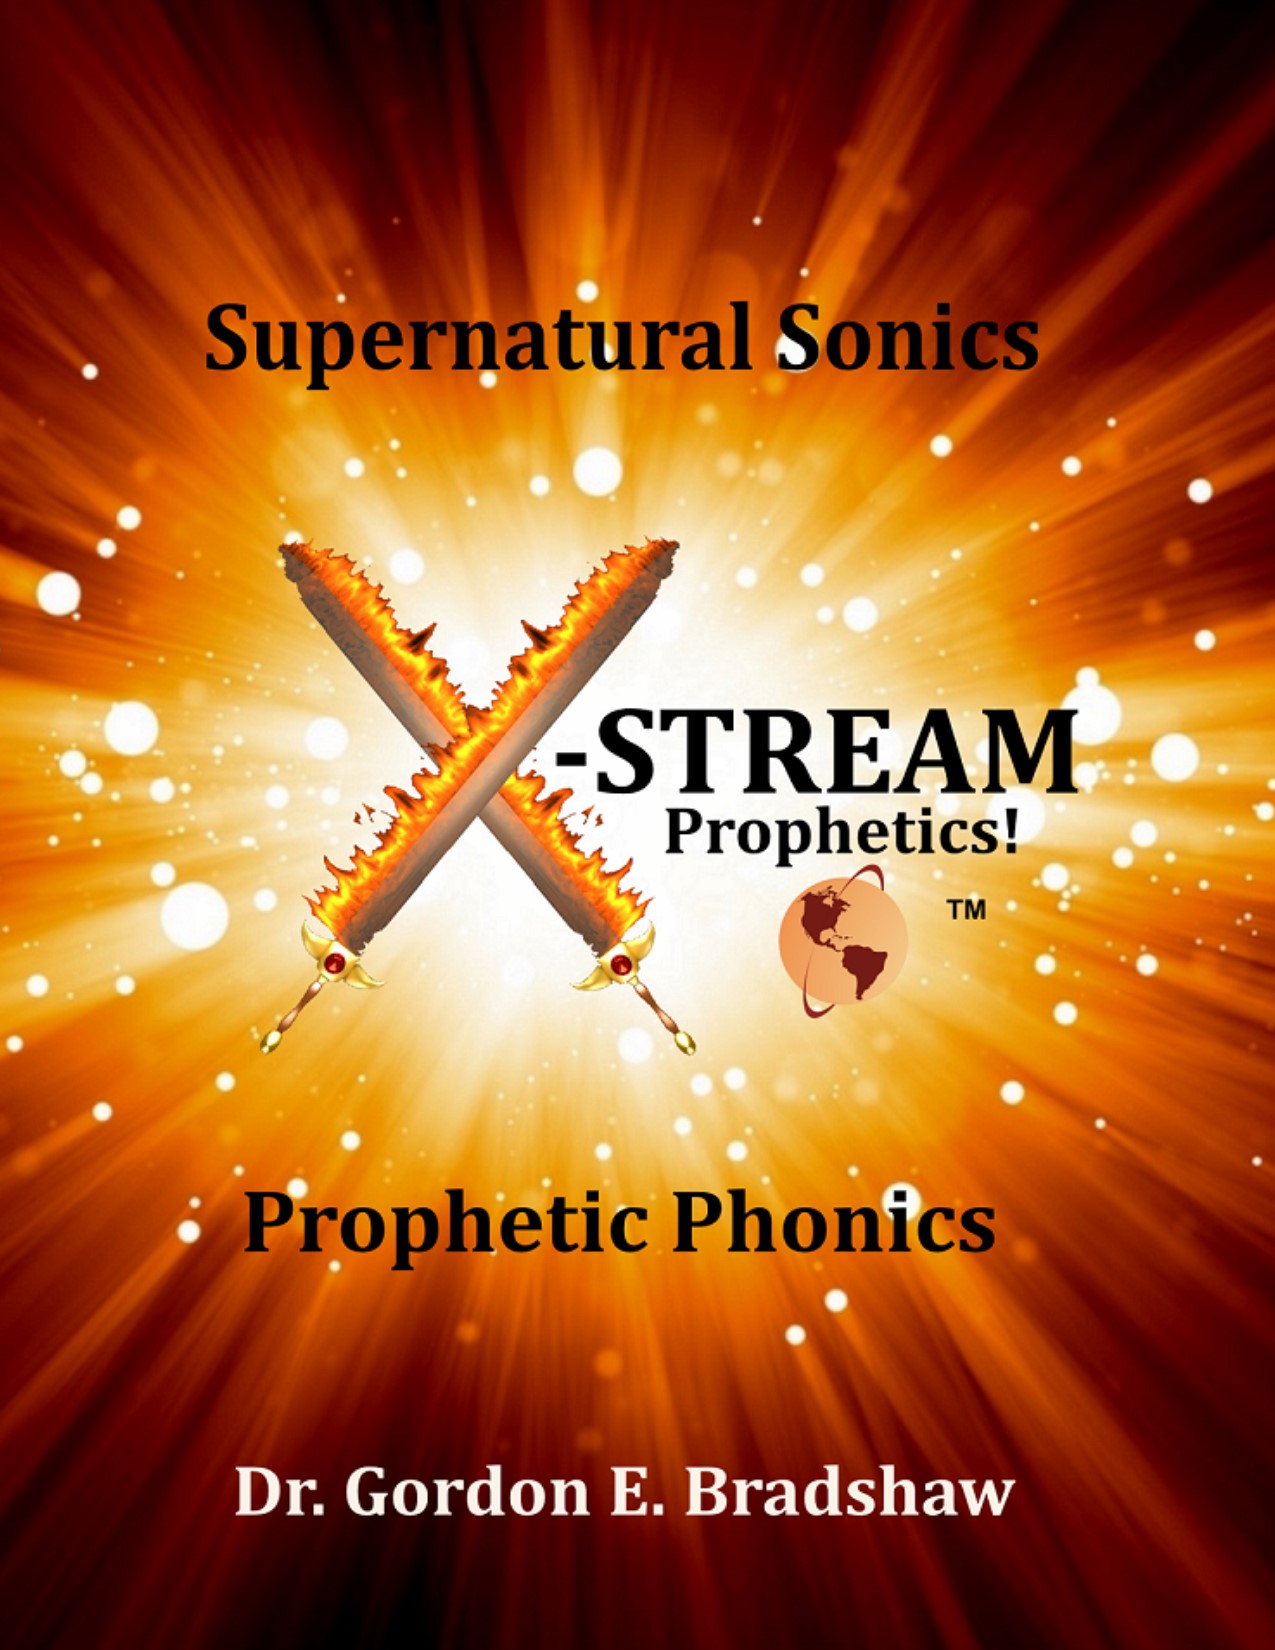 X-STREAM PROPHETICS: Supernatural Sonics & Prophetic Phonics 